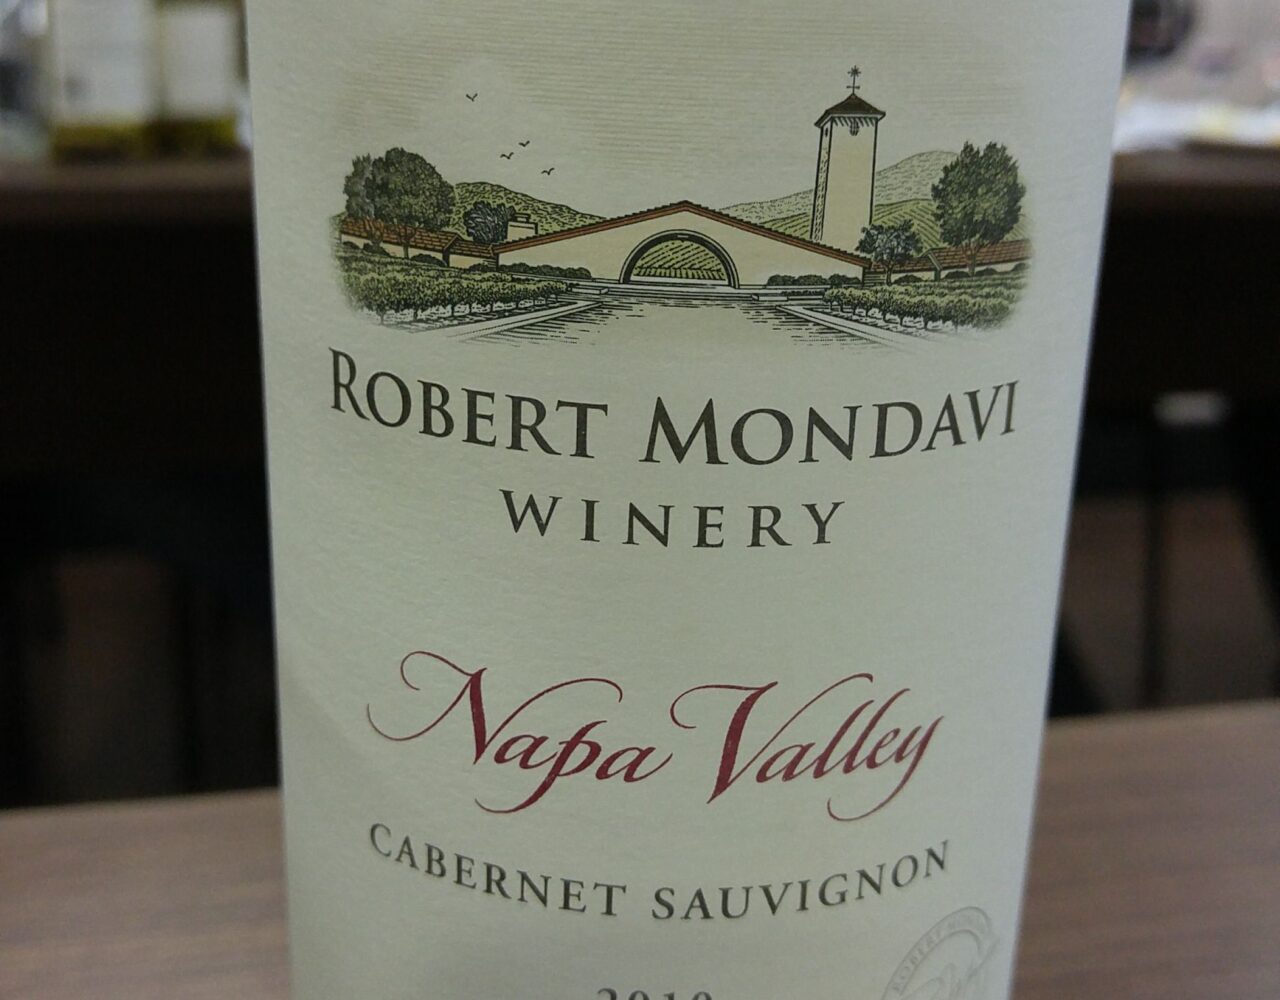 Robert Mondavi Napa Valley Cabernet Sauvignon 2010: Review